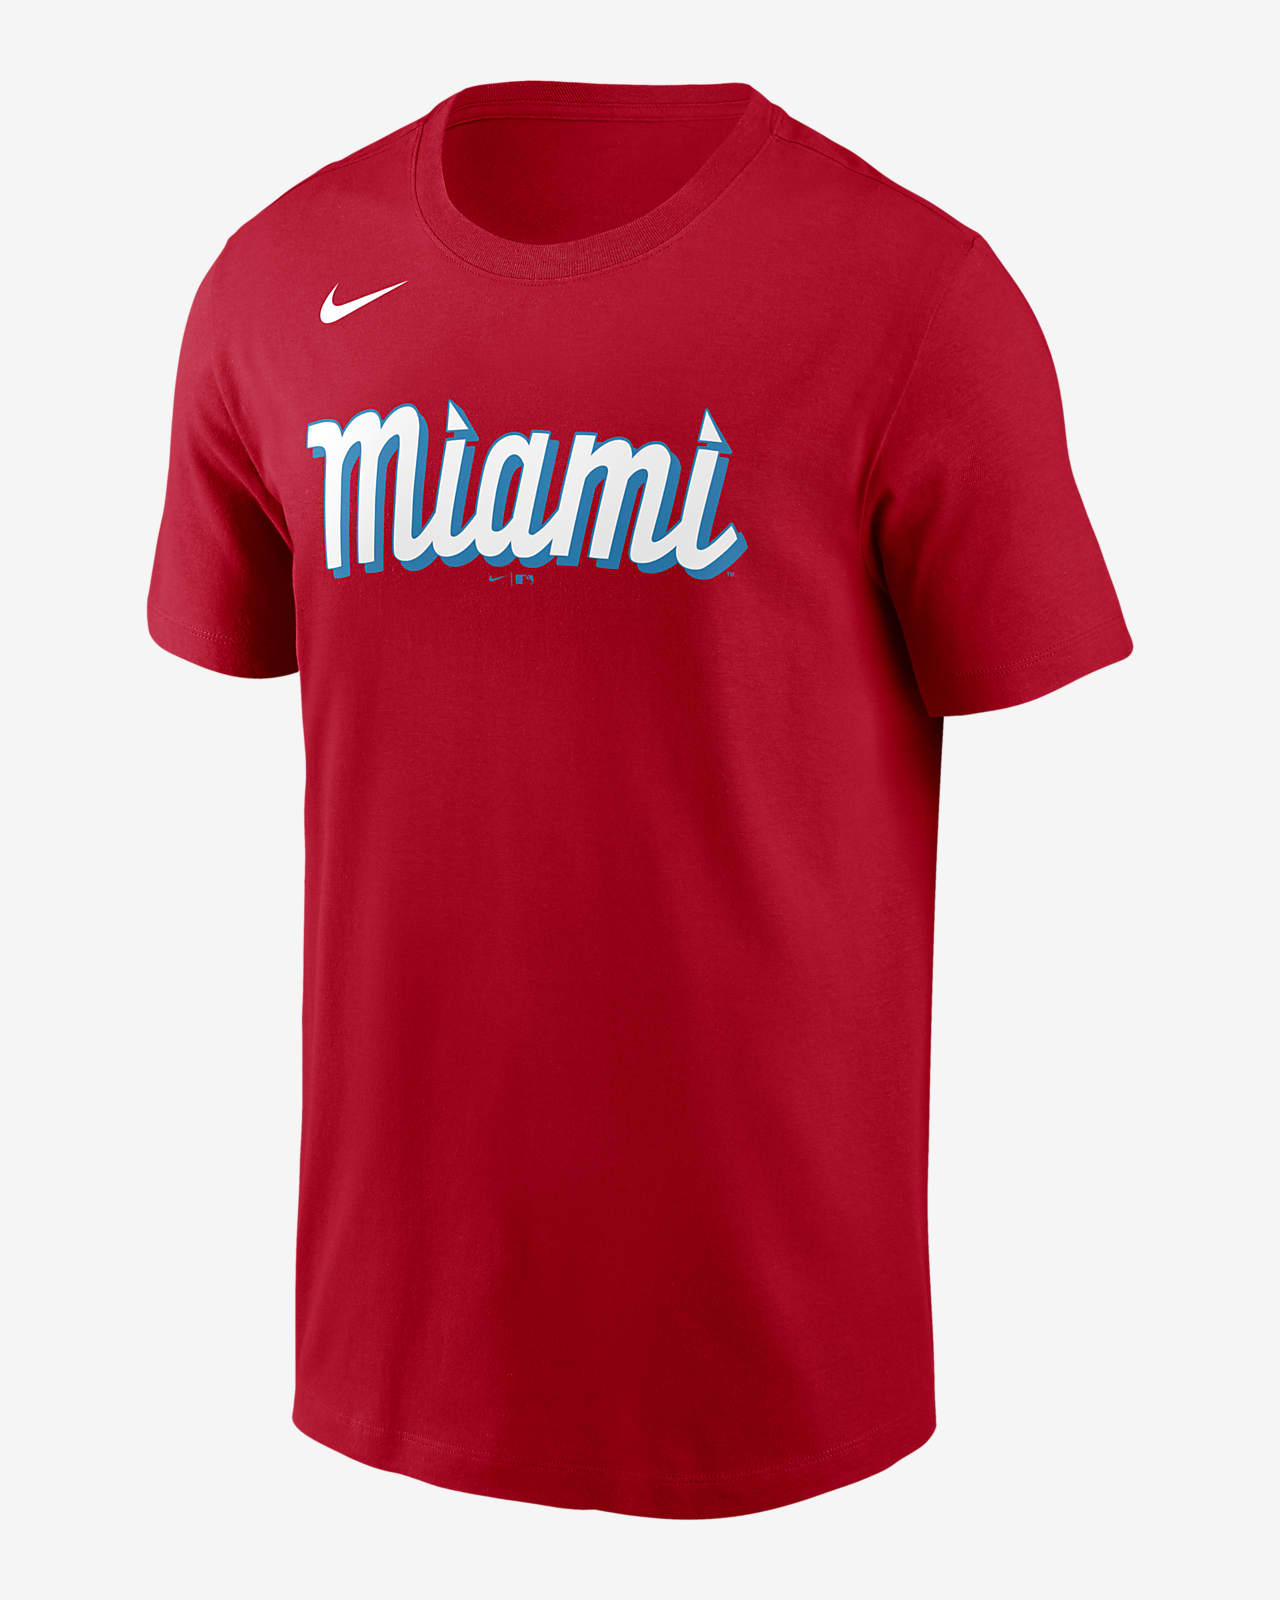 MLB Miami Marlins City Connect (Brian Anderson) Men's T-Shirt